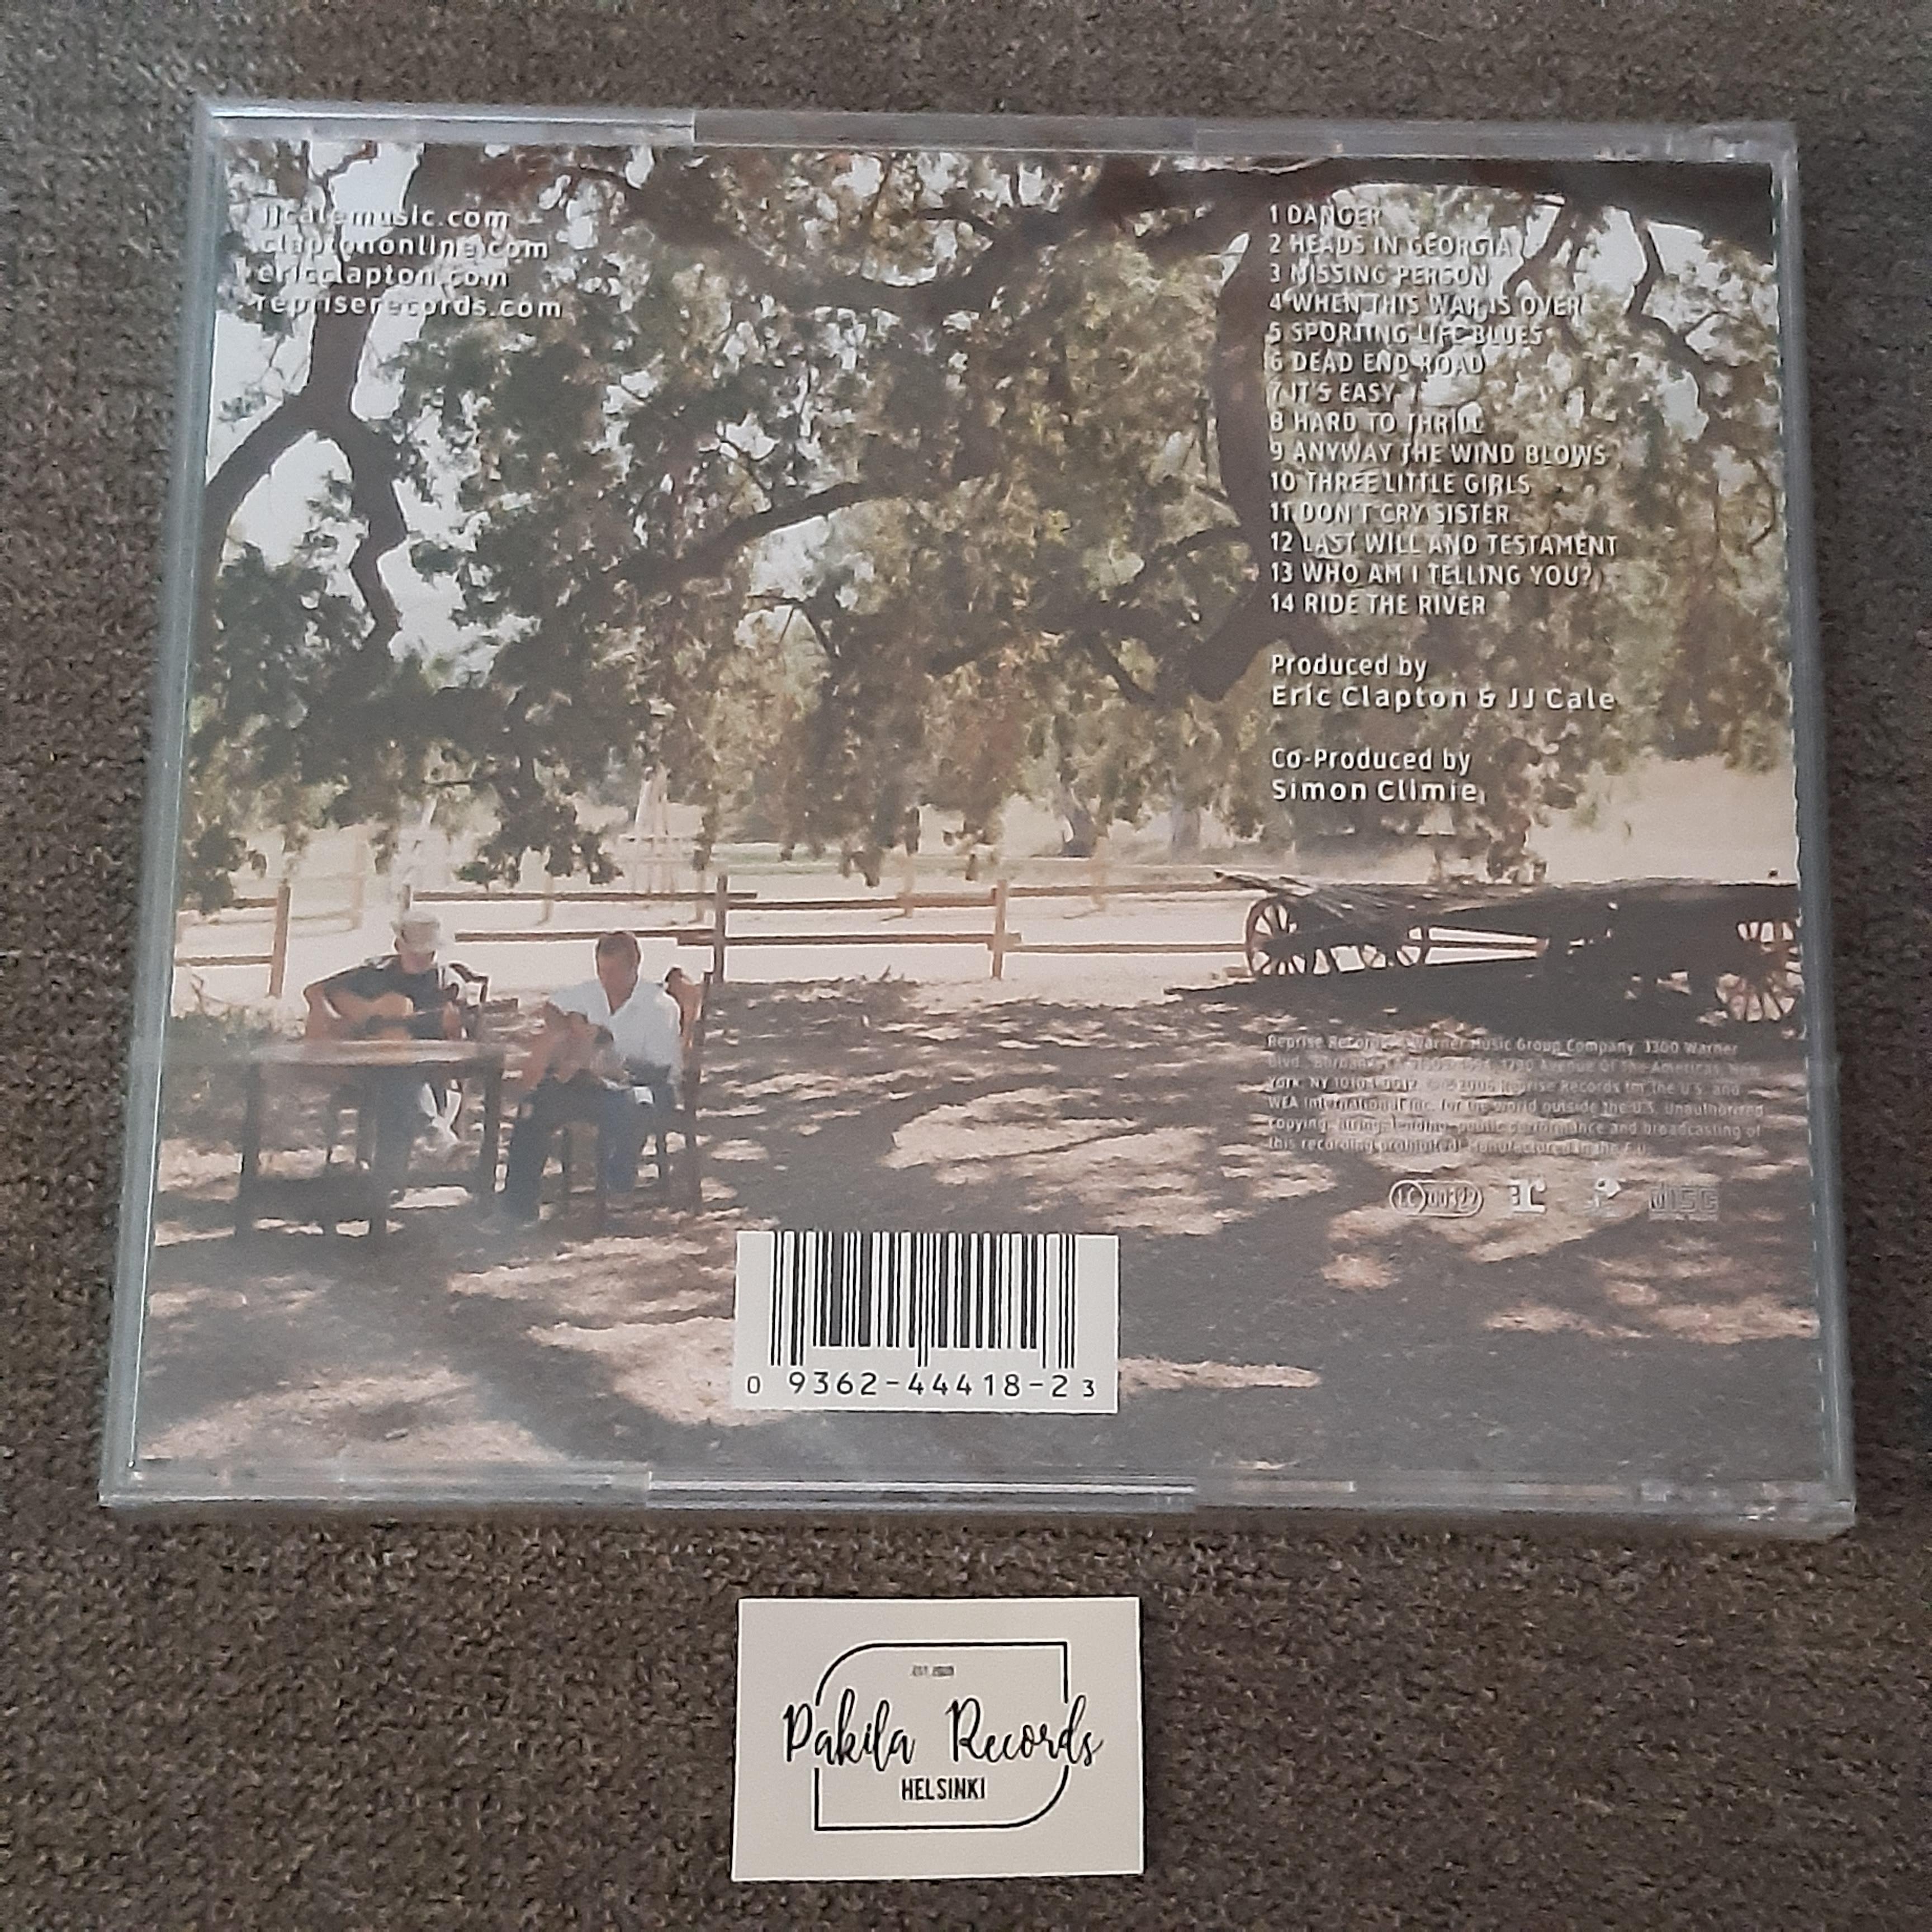 JJ Cale & Eric Clapton - The Road To Escondido - CD (uusi)